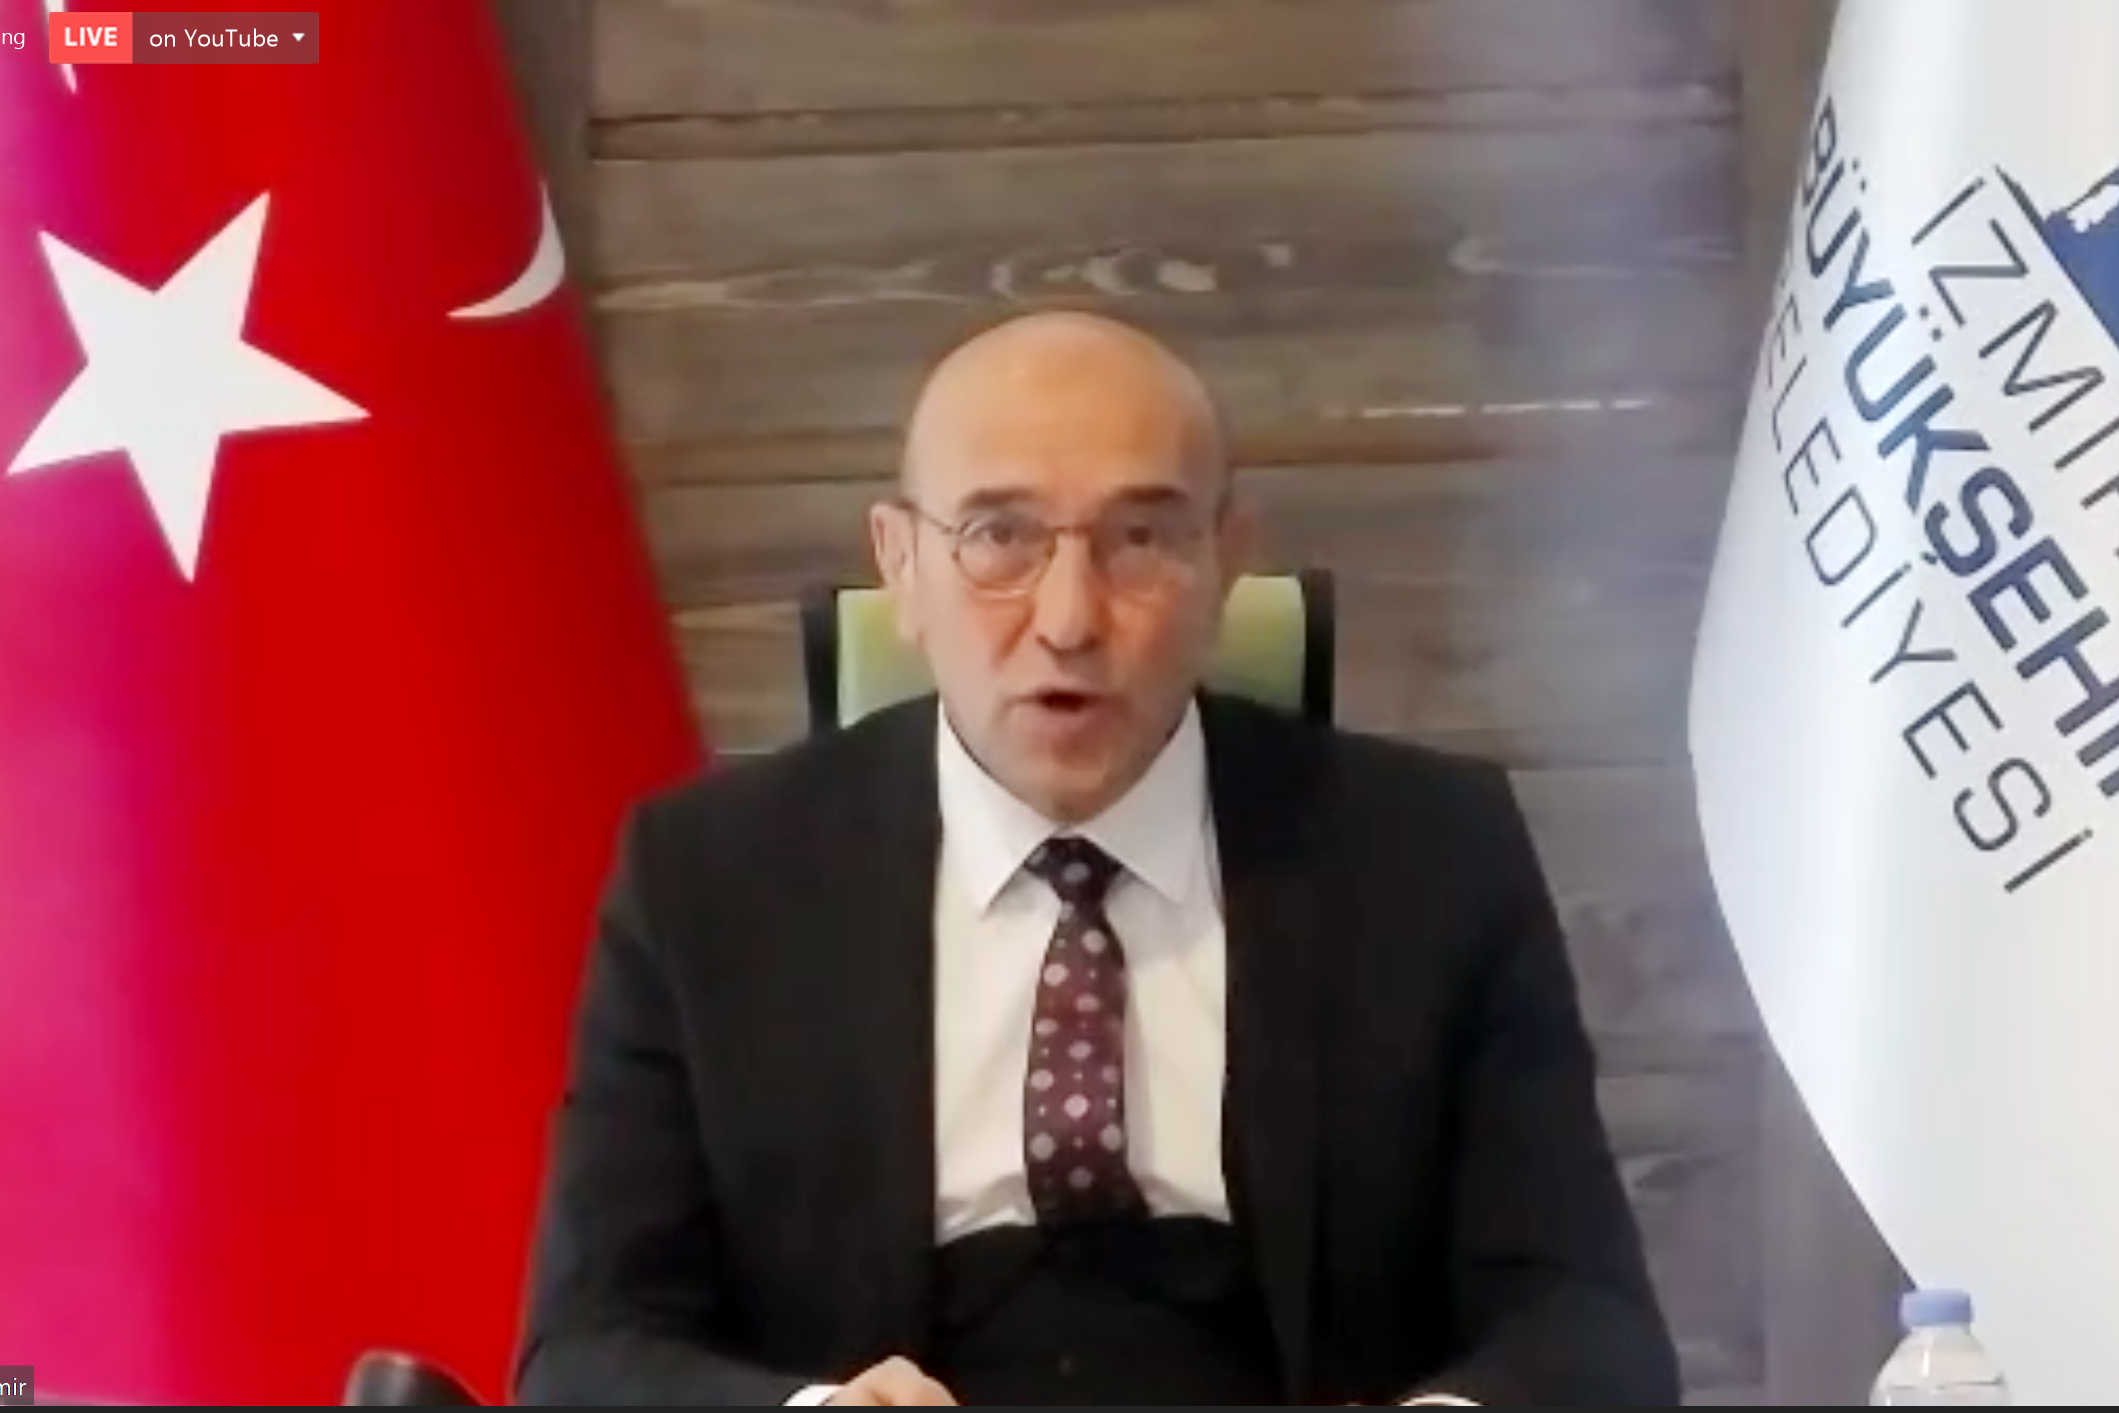 Tunç Soyer, Mayor of Izmir, Turkey